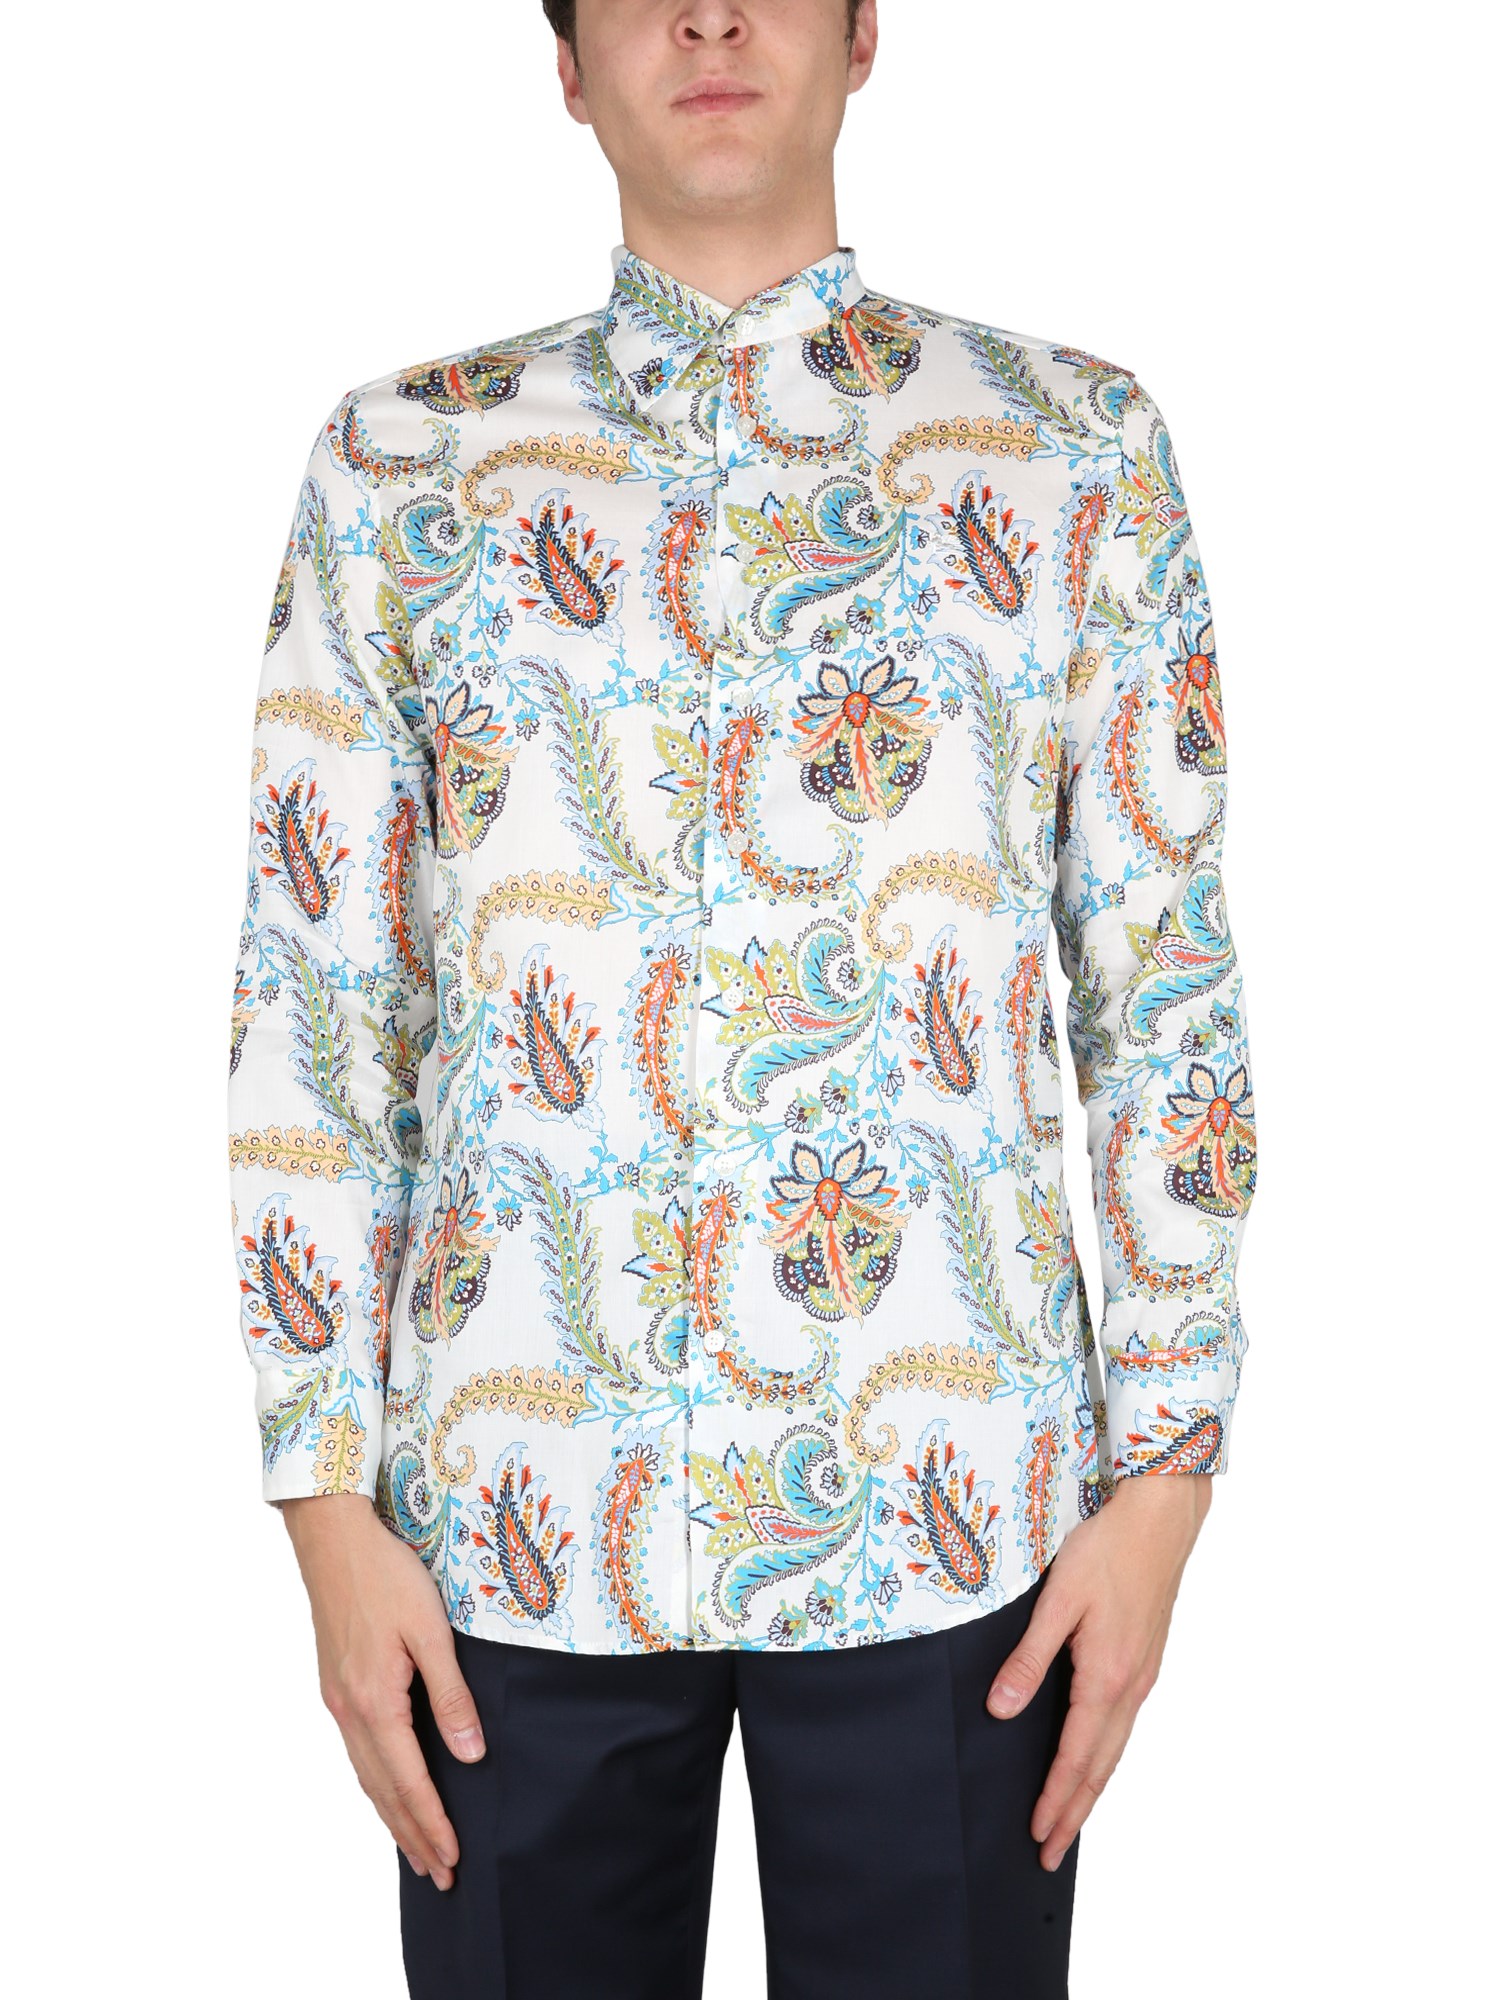 etro floral paisley shirt